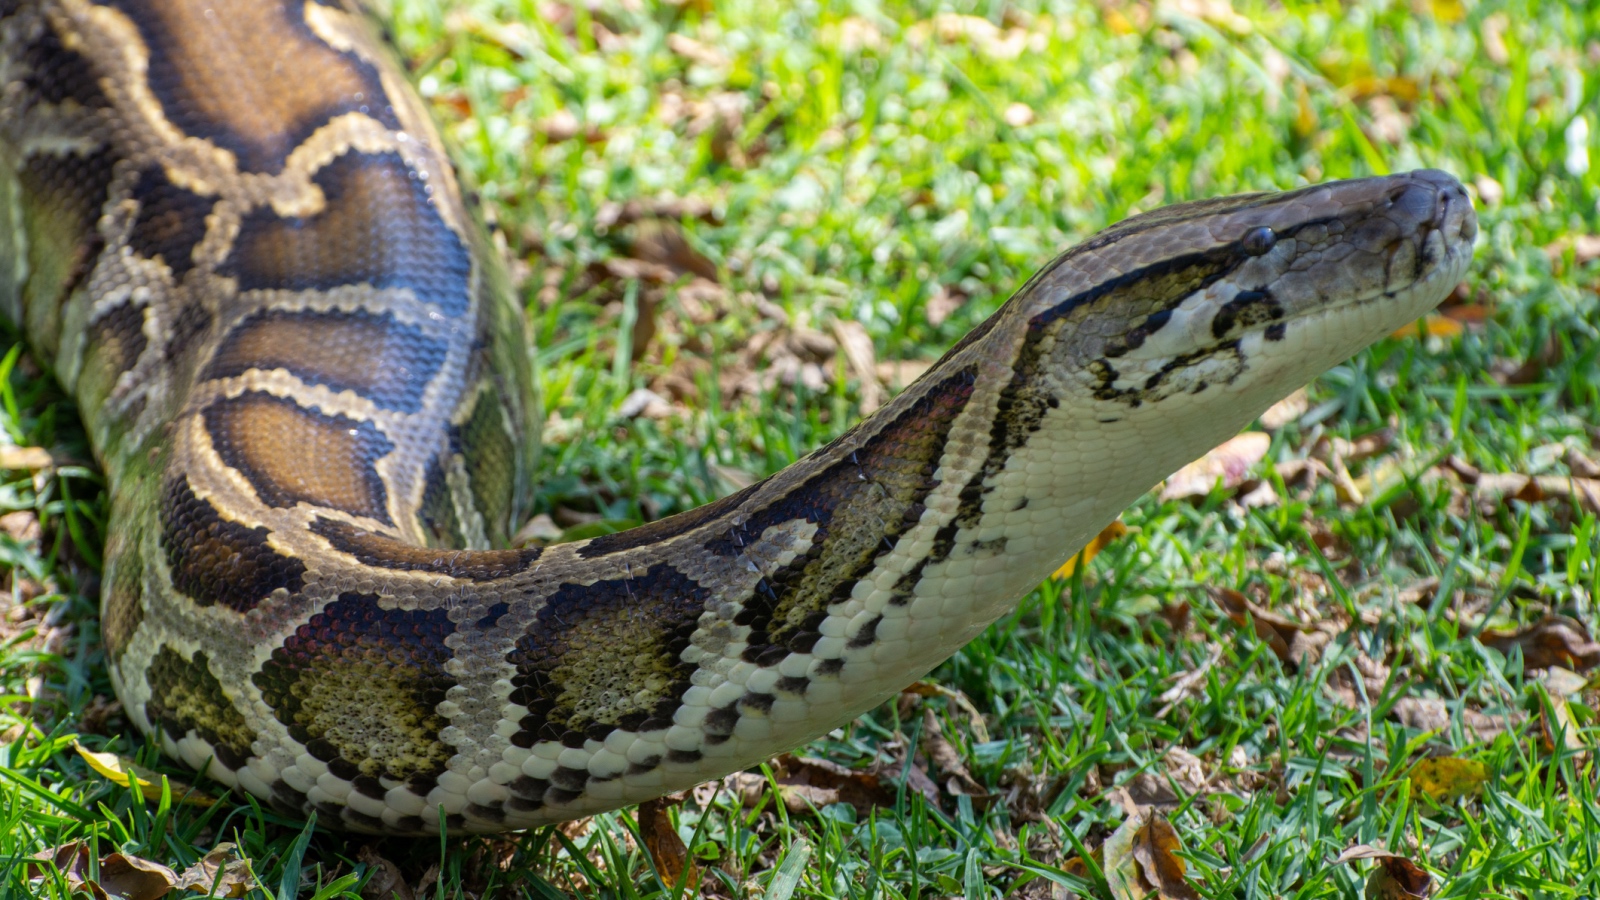 large Burmese python slithering on grass